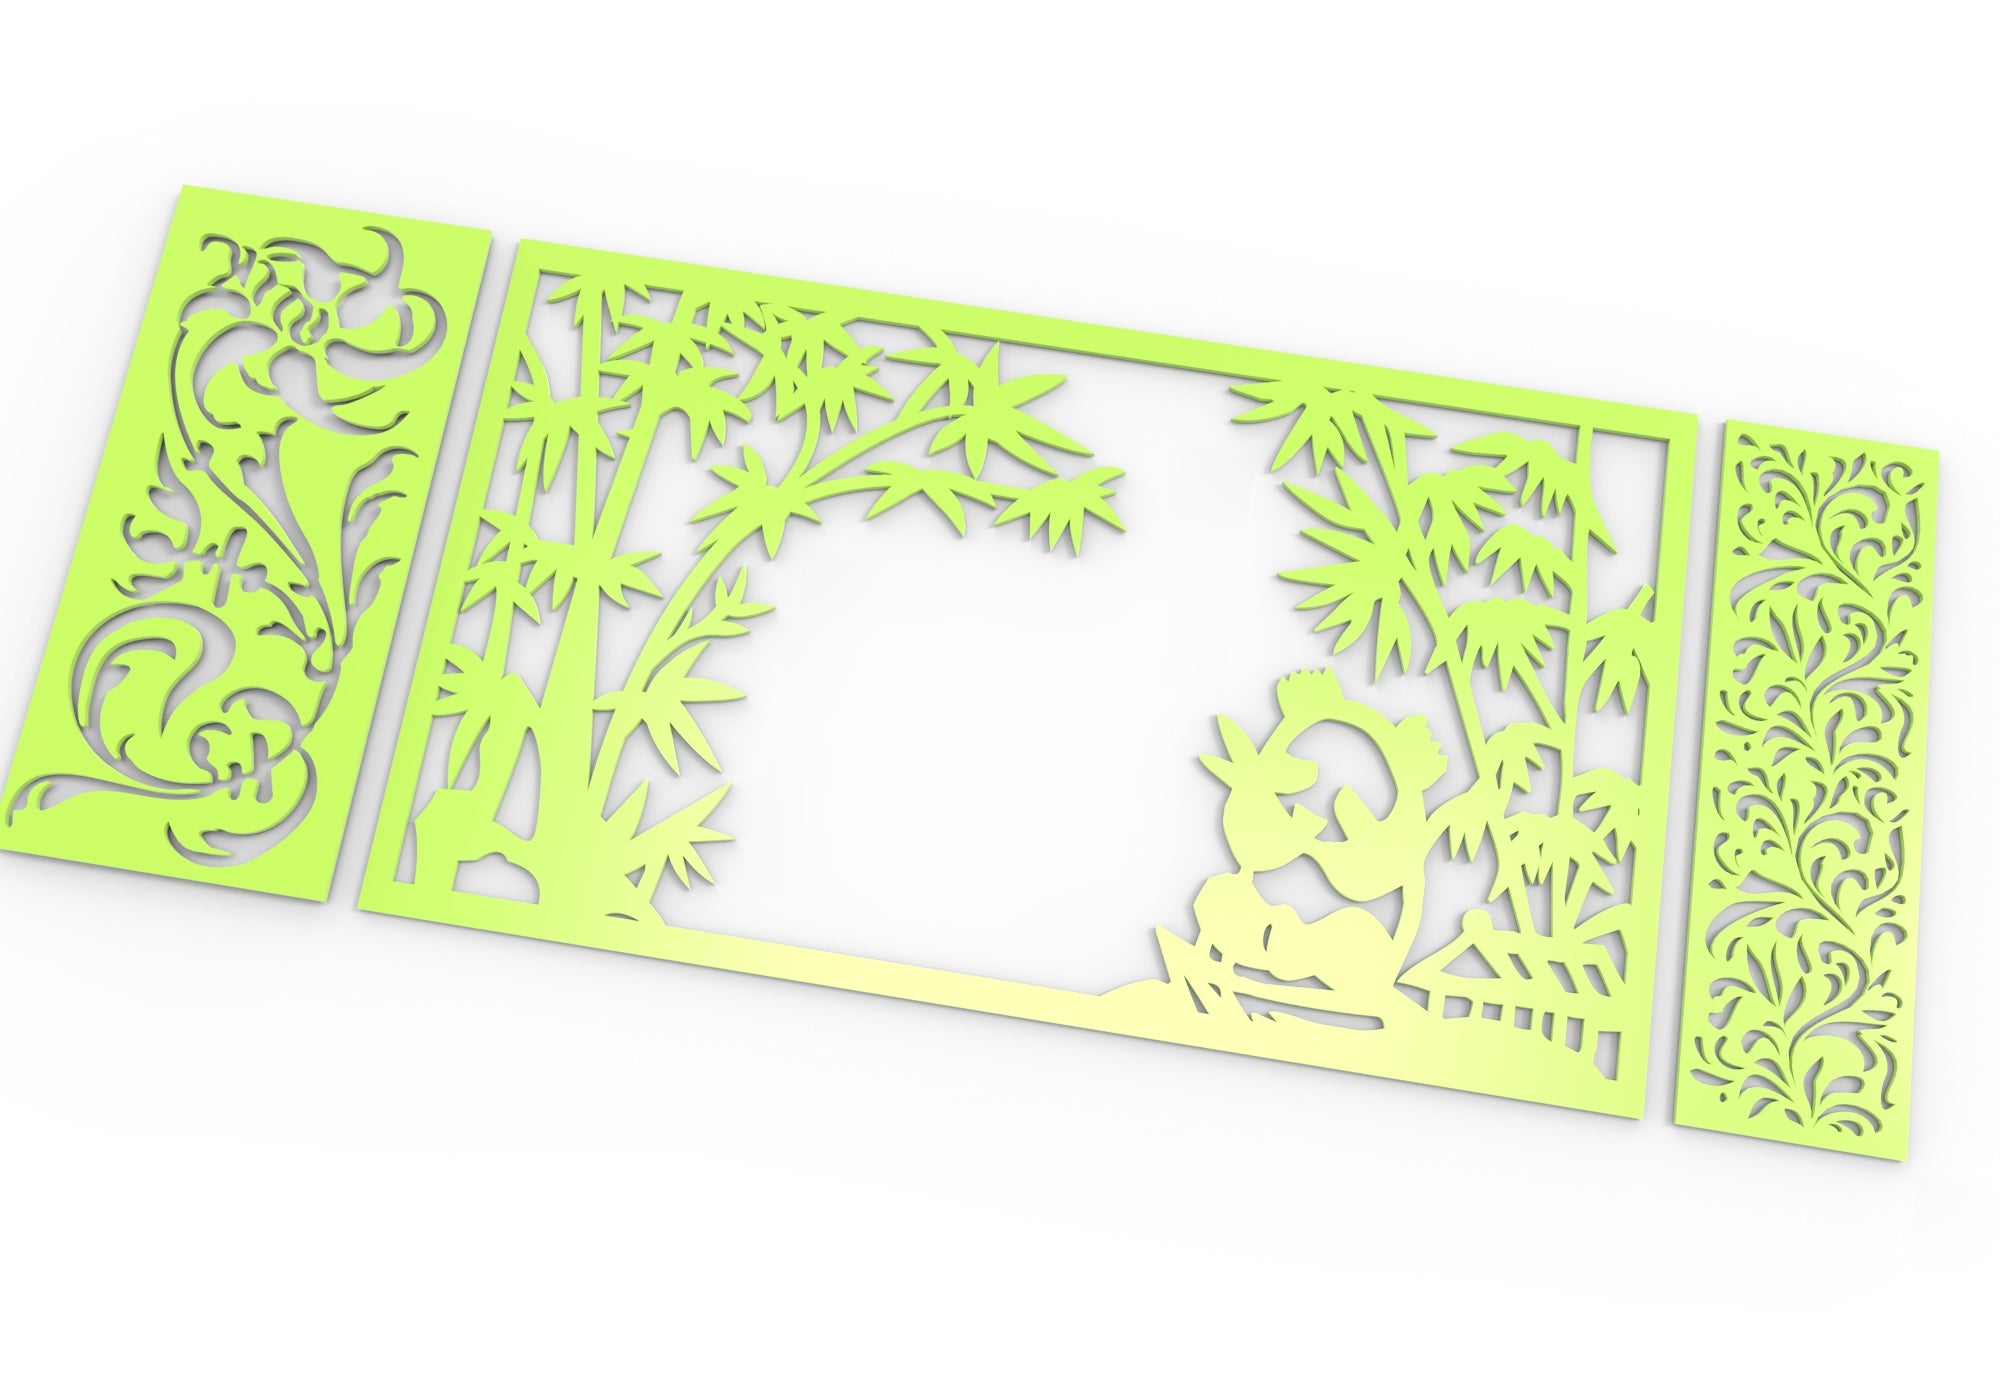 Decorative Tree Pattern Panel Templates SVG CNC Laser Cutting File | SVG, DXF, AI |#C047|